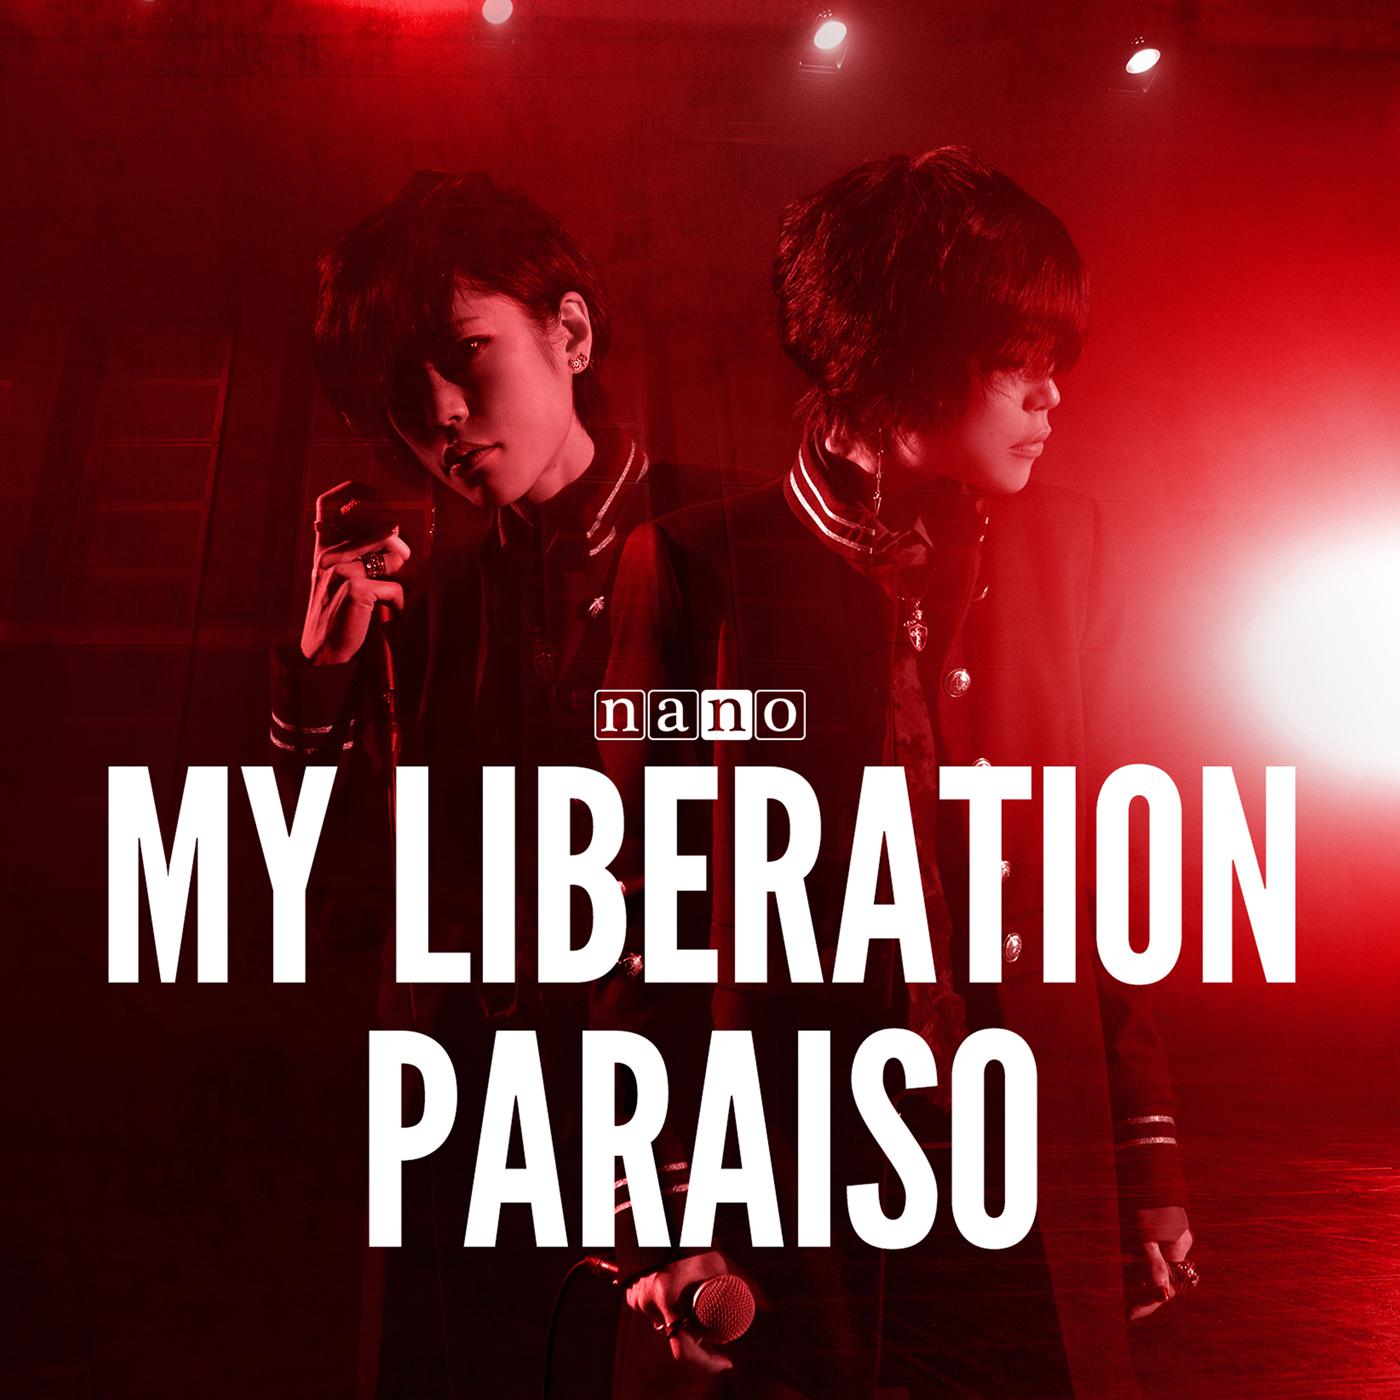 DARE DEVIL歌词 歌手ナノ-专辑MY LIBERATION/PARAISO (ナノver.)-单曲《DARE DEVIL》LRC歌词下载